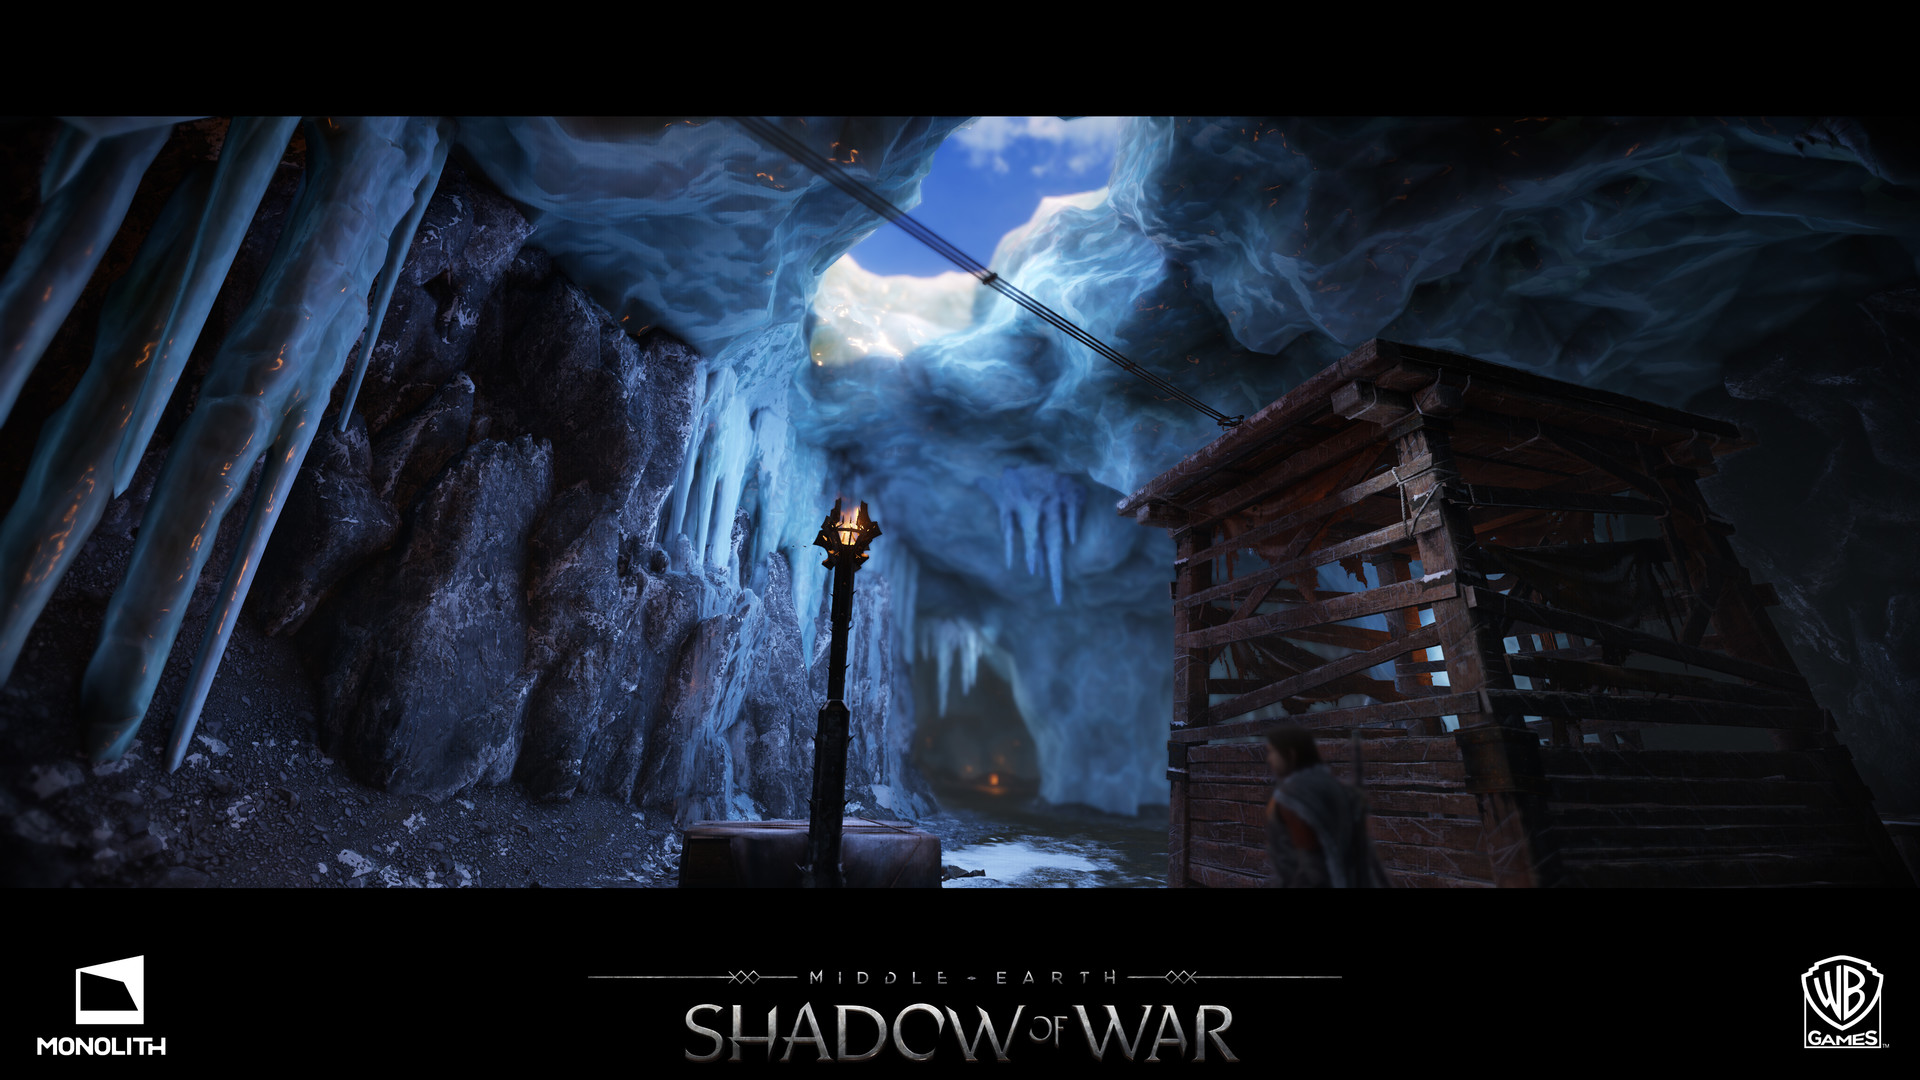 ArtStation - Eryn - Shadow Of Mordor